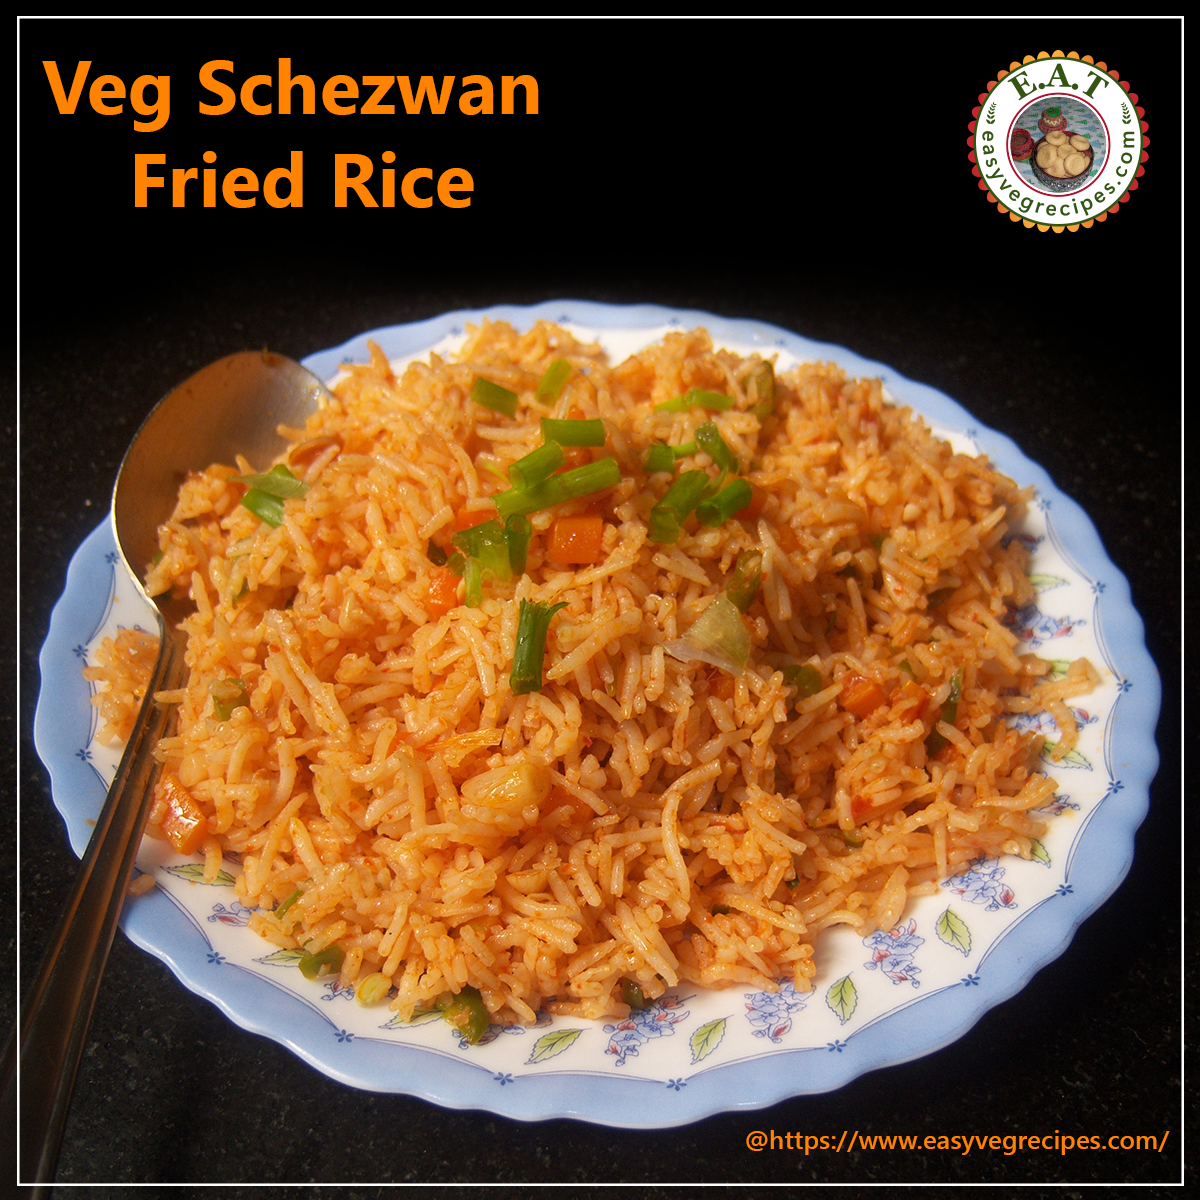 Veg Schezwan Fried Rice